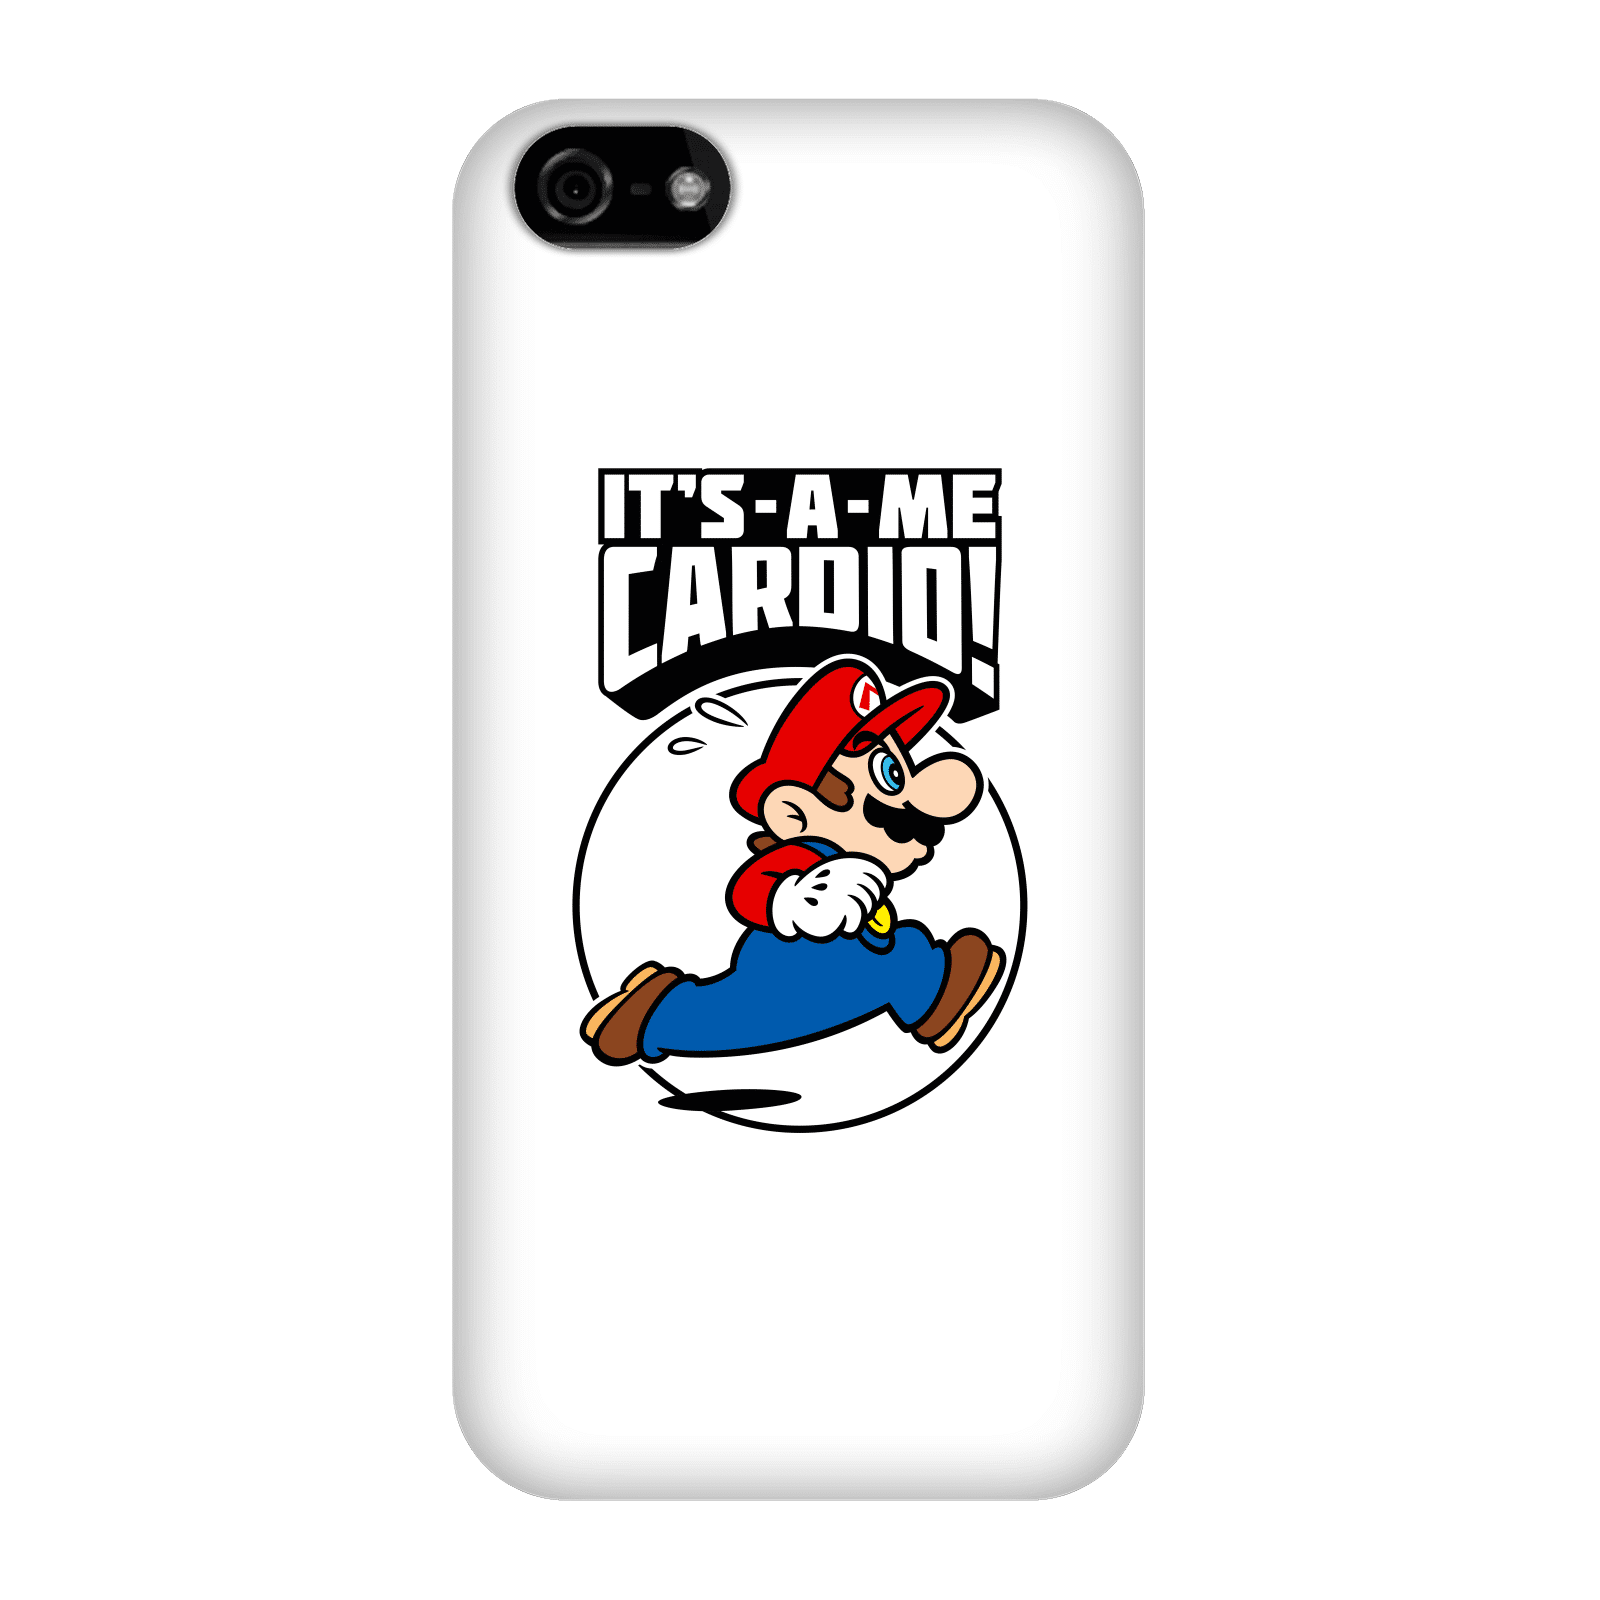 Nintendo Super Mario Cardio Phone Case - iPhone 5C - Snap Case - Gloss